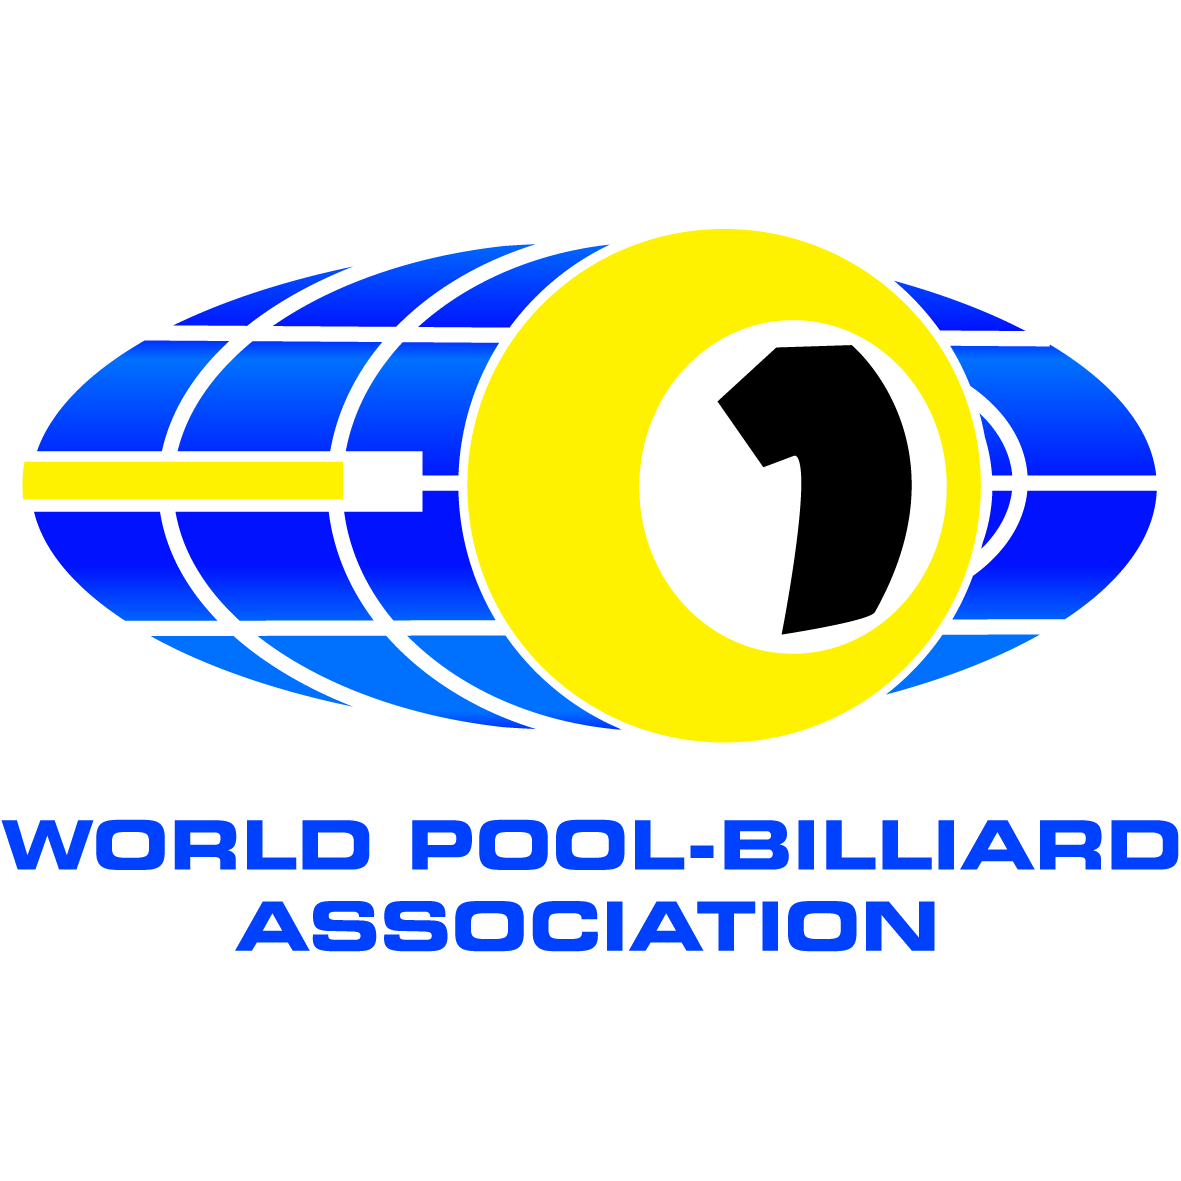 World Pool-Billiards Association endorses T140 Events™